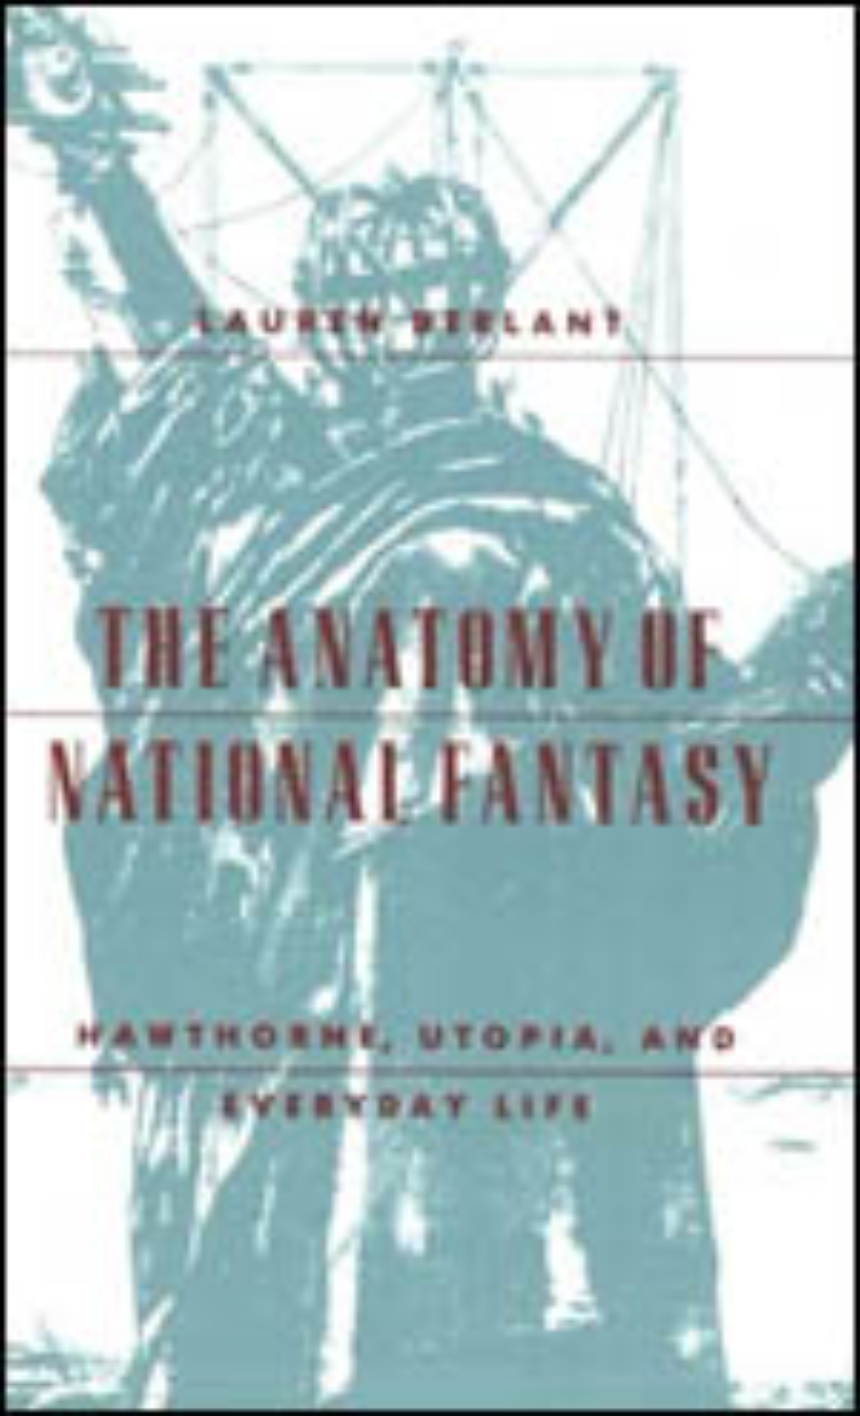 The Anatomy of National Fantasy